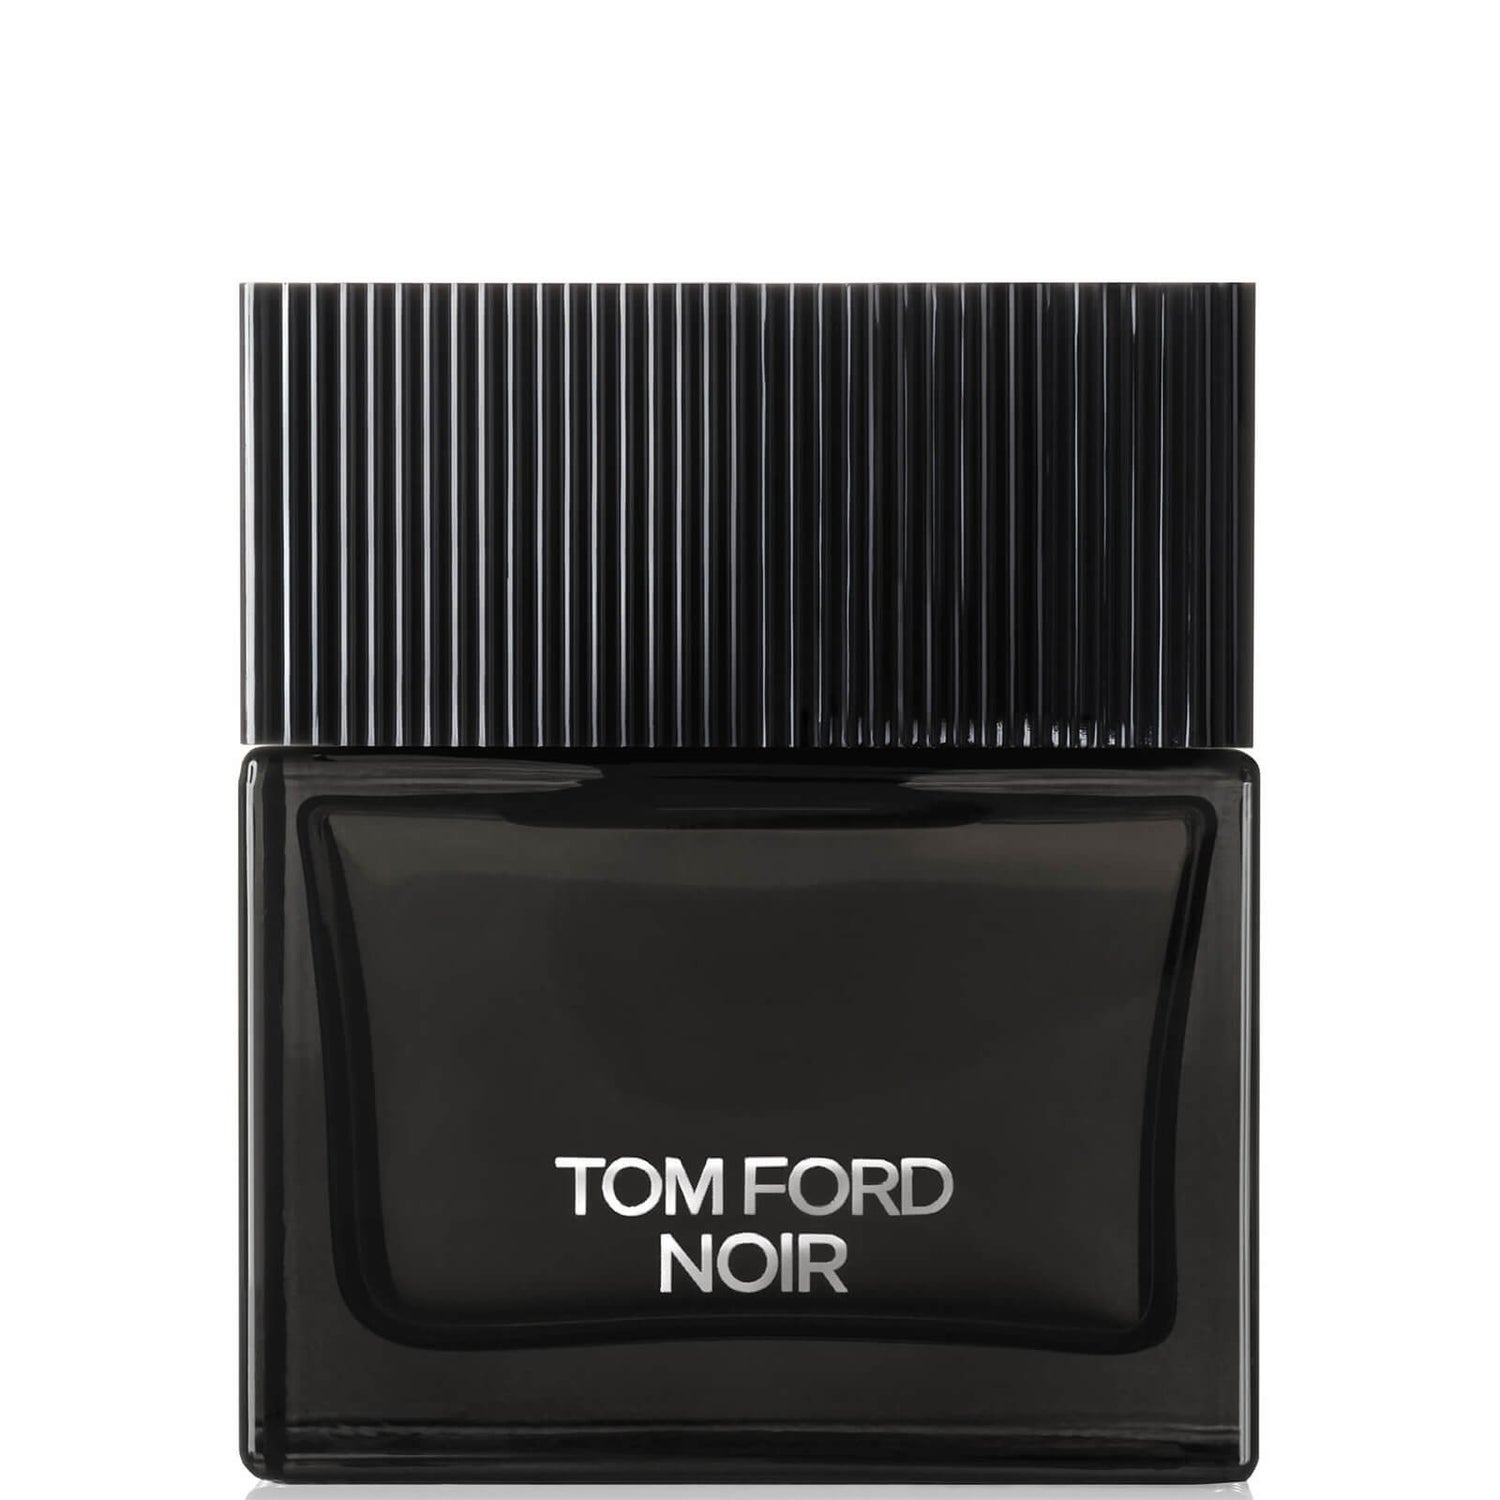 Tom Ford Noir Eau de Parfum 50ml - LOOKFANTASTIC